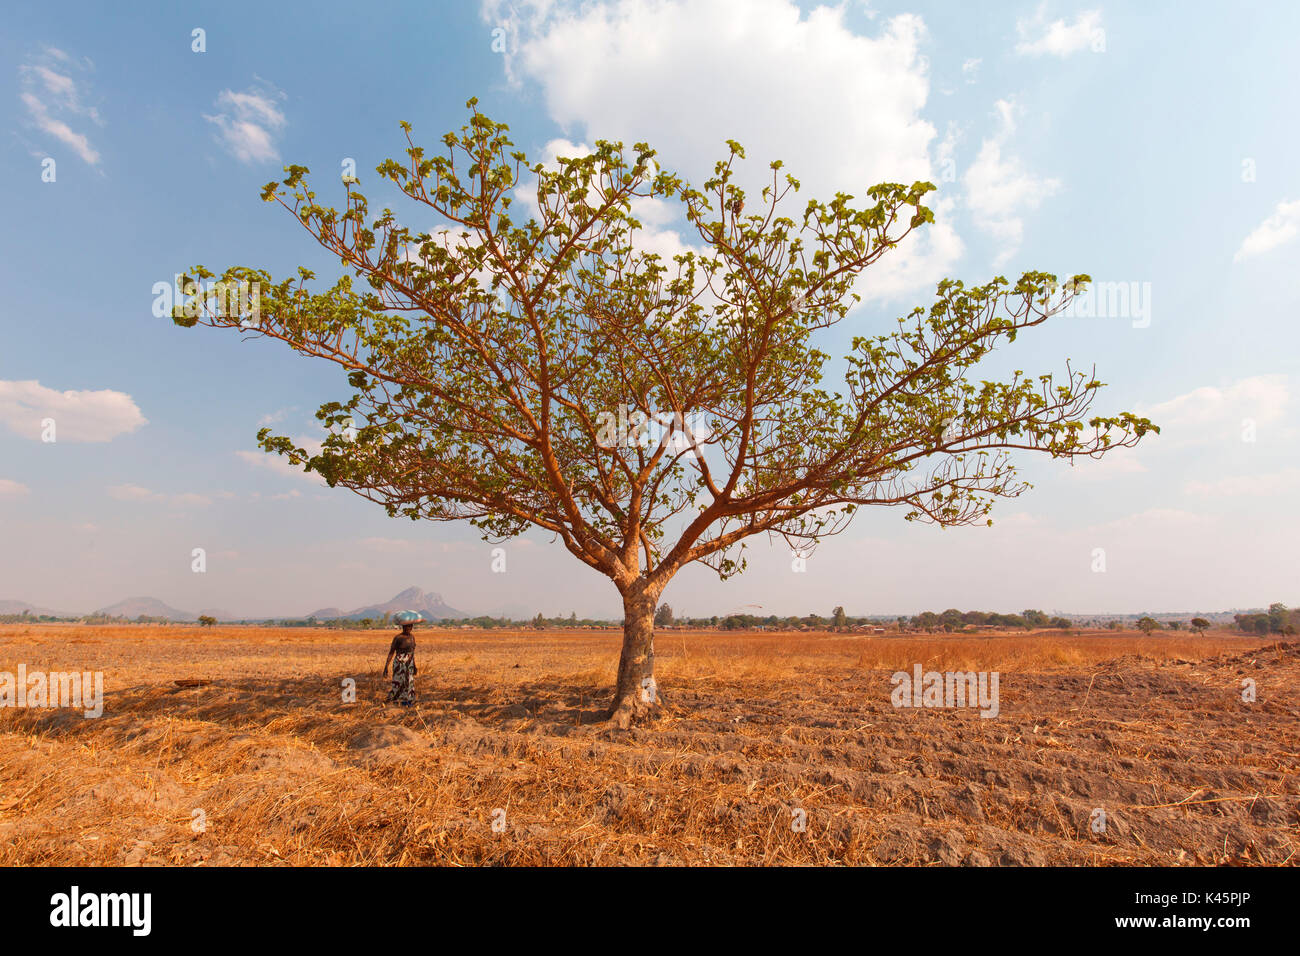 Afrika, Malawi, Lilongwe. Frau mit Last von Korn in die Landschaft Afrikas Stockfoto